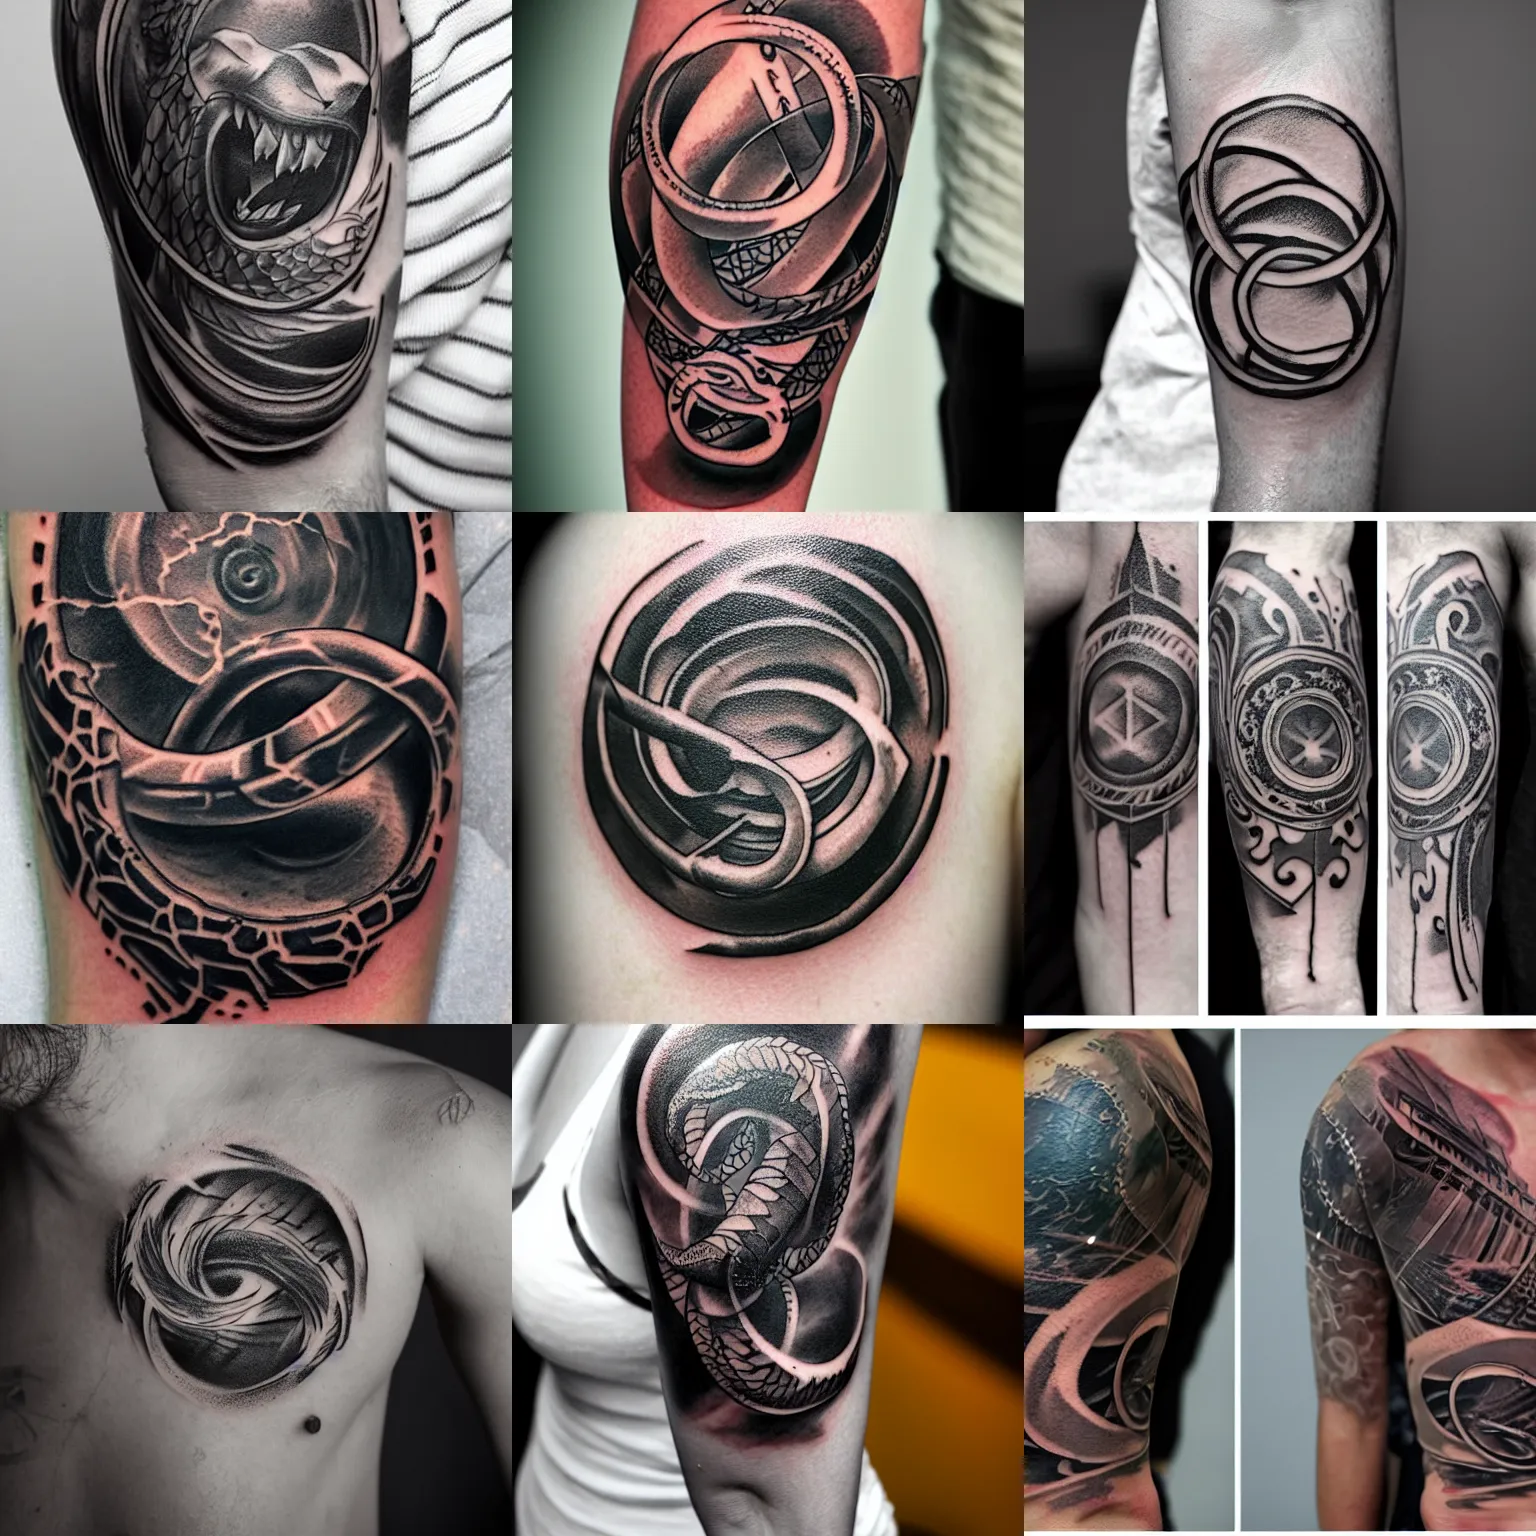 TATTOO ARTIST (@jodhpur_tattoo_art) • Instagram photos and videos